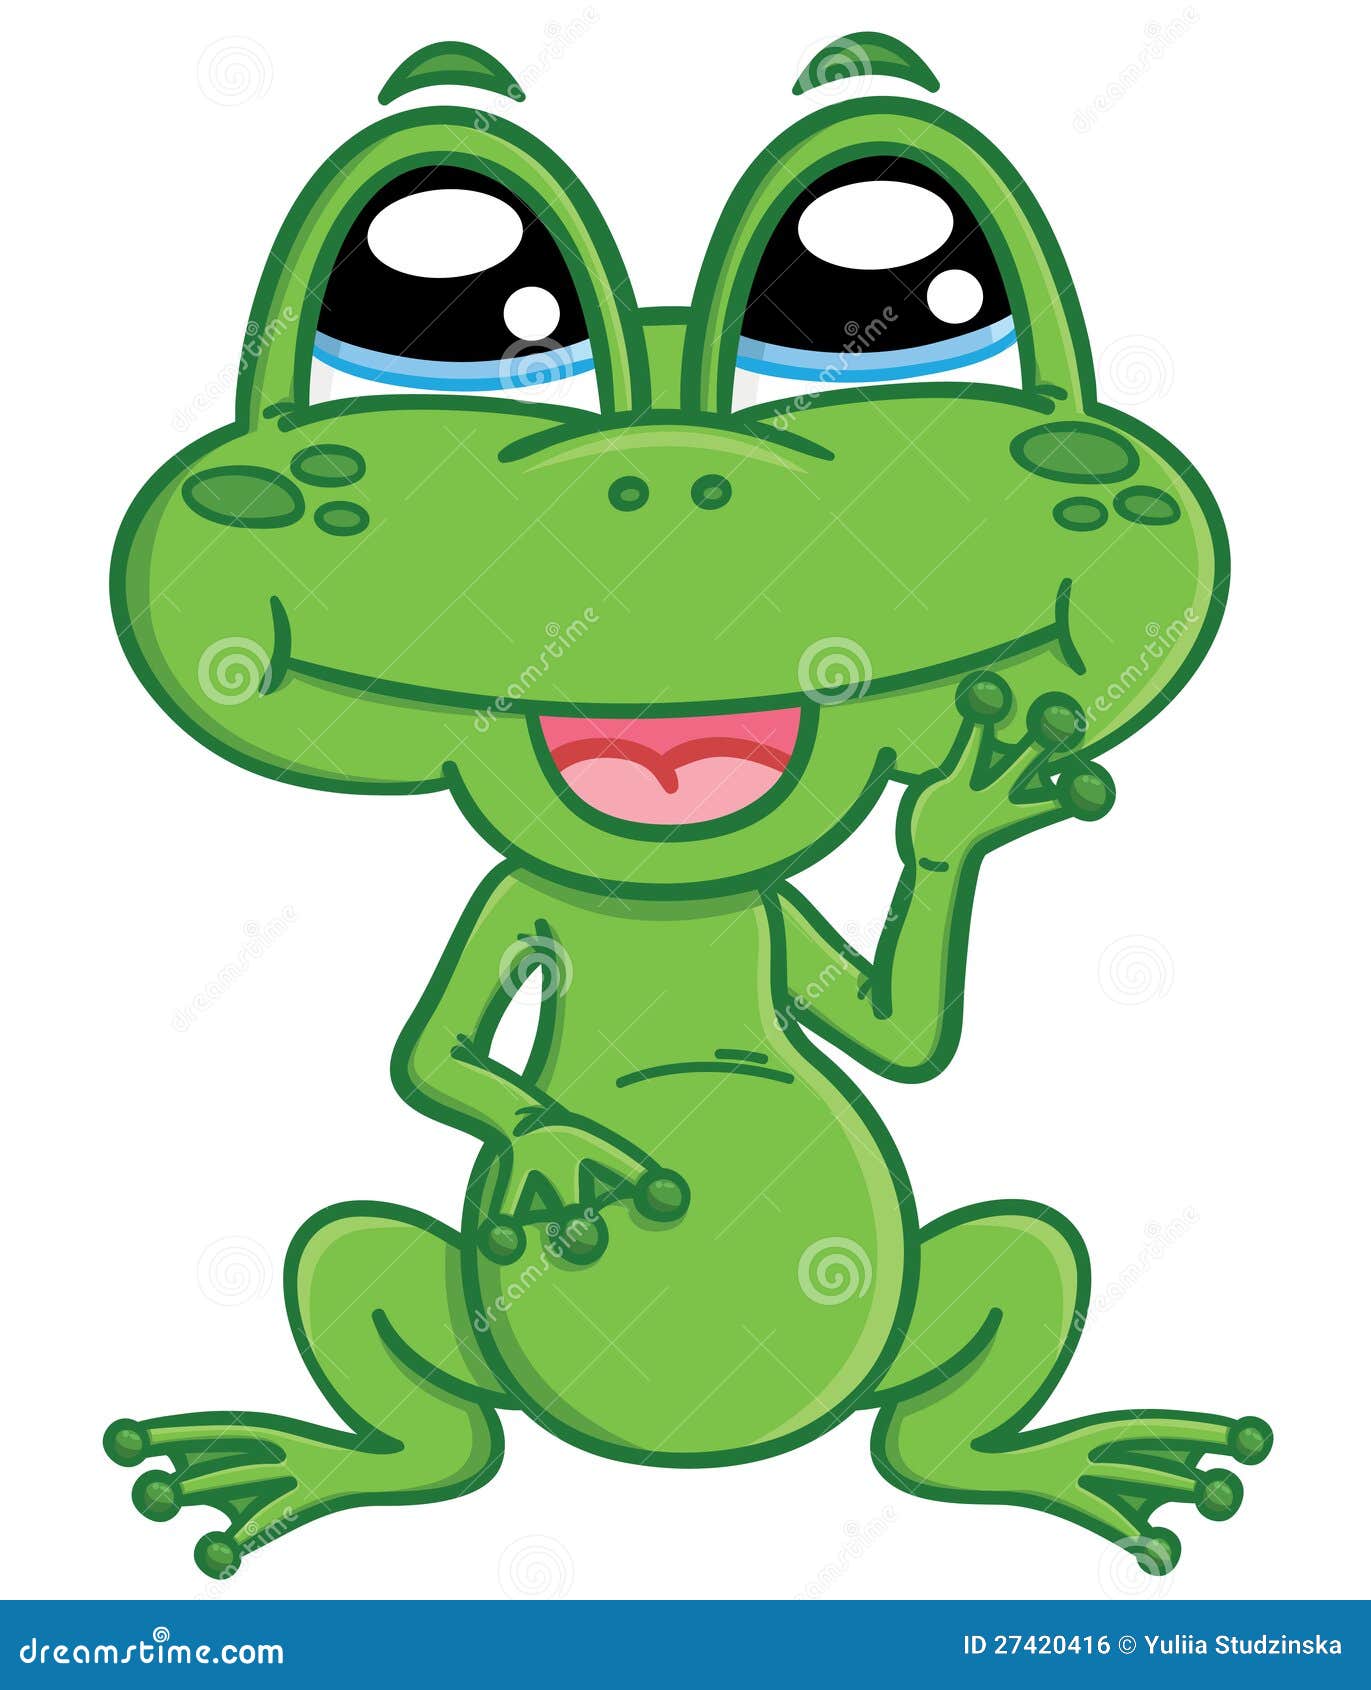 Cute Cartoon Frog Royalty Free Stock Image - Image: 27420416